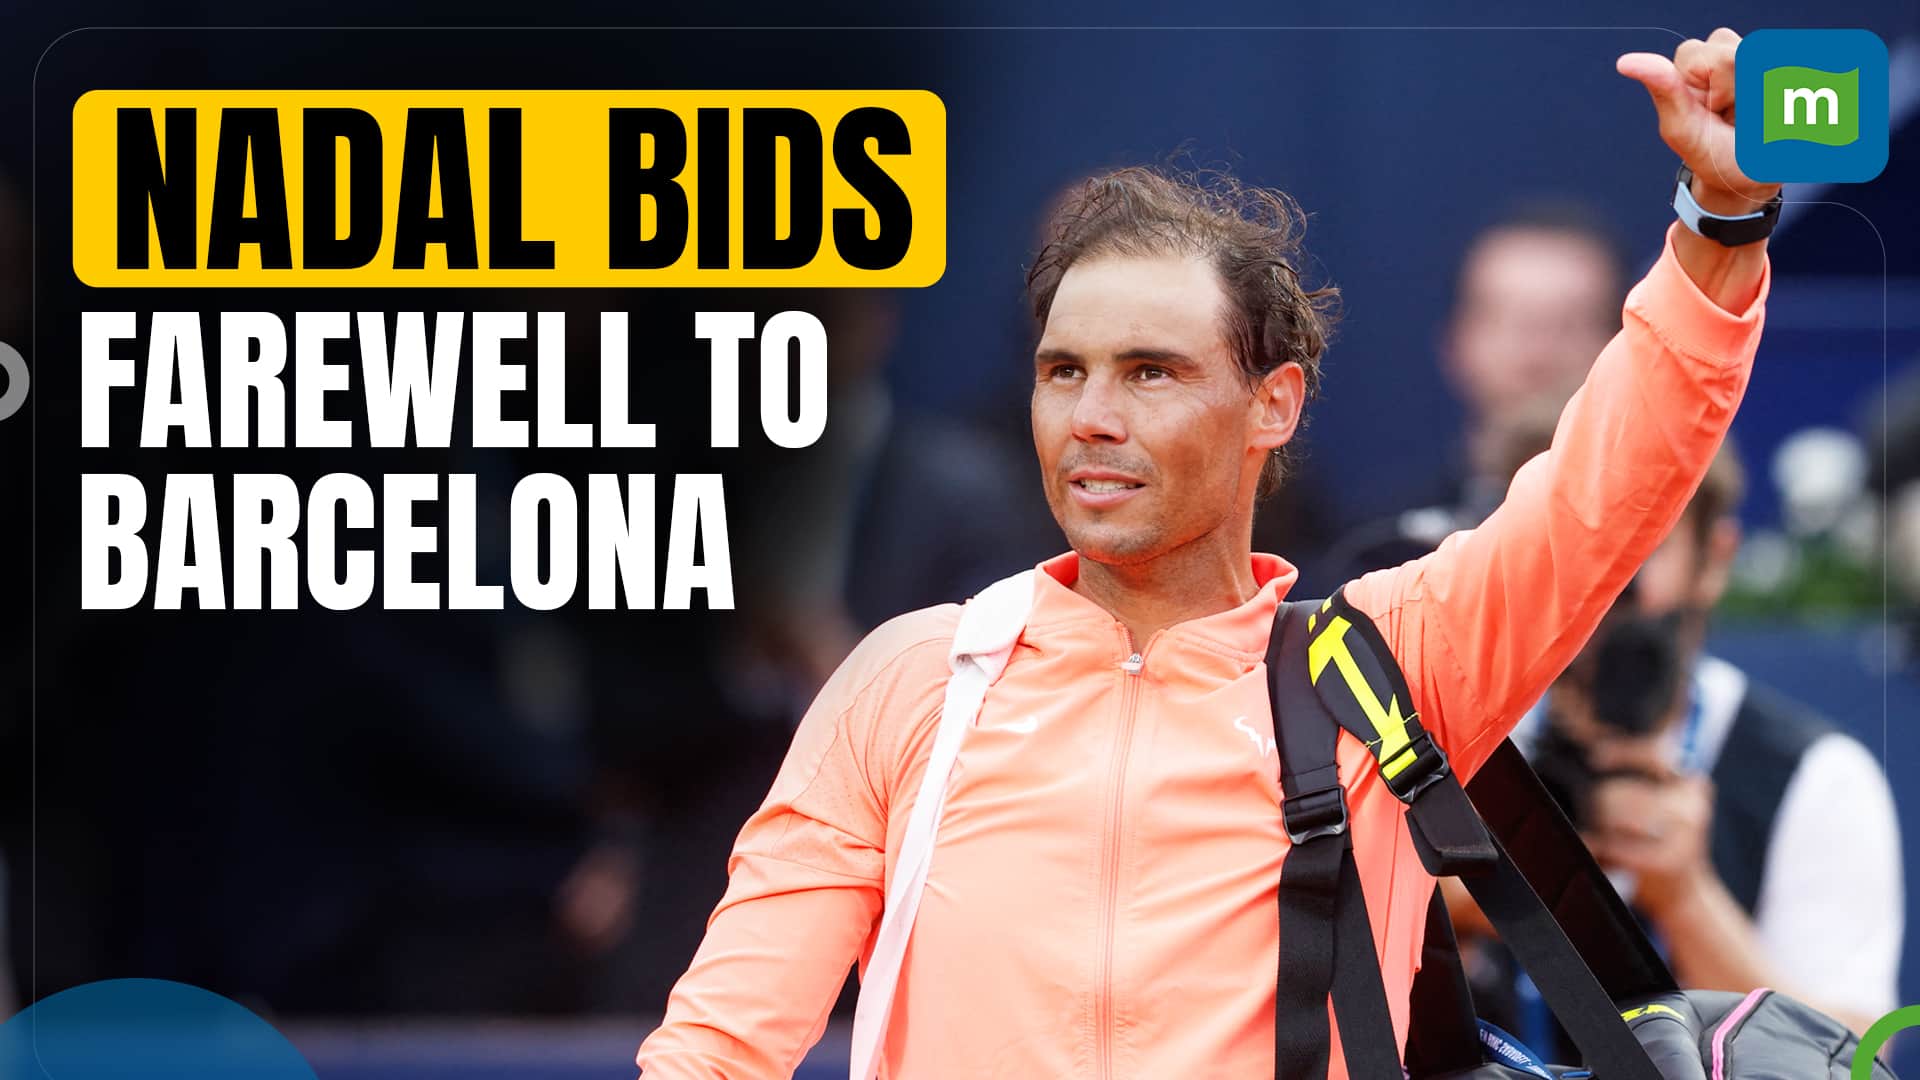 Rafael Nadal Loses To Alex de Minaur In Second Round At Barcelona